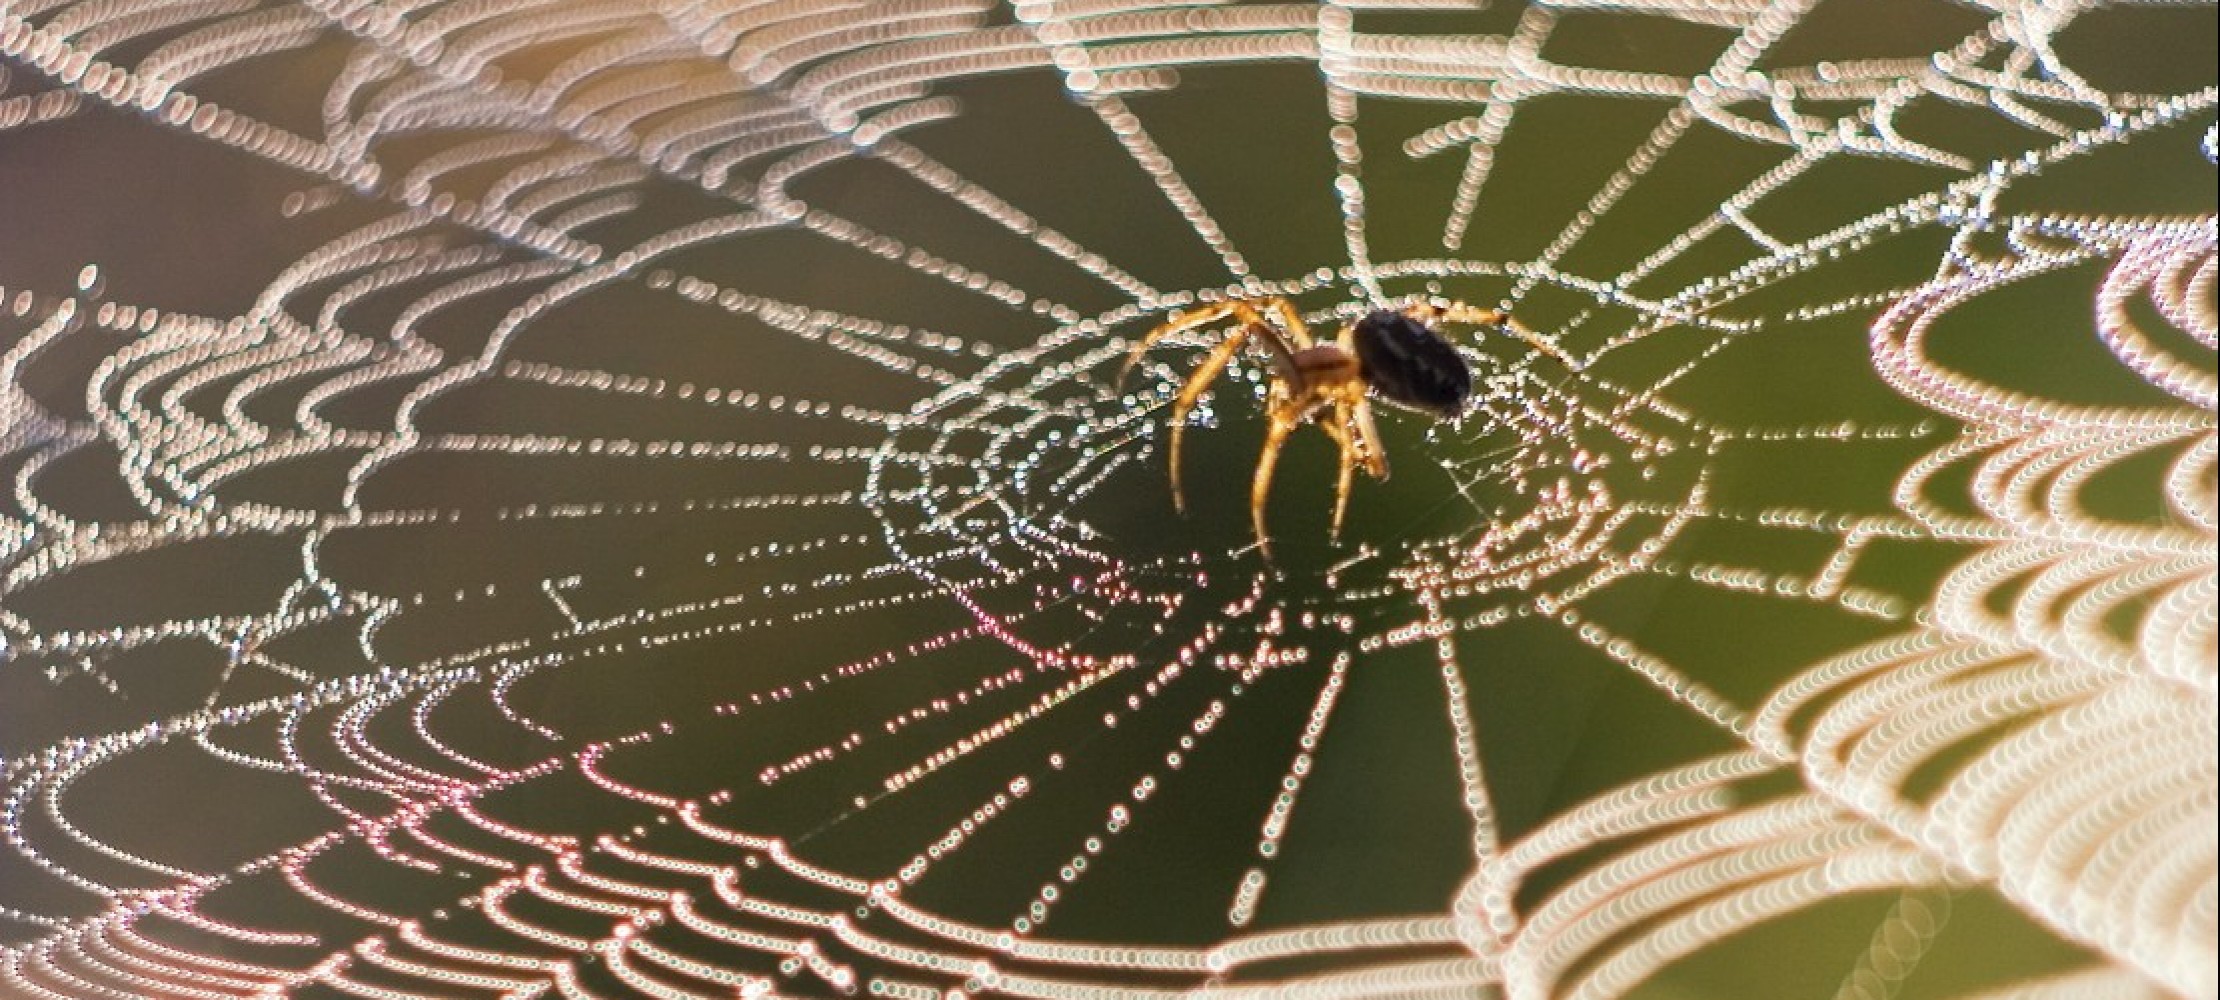 kennenlernen spinnennetz